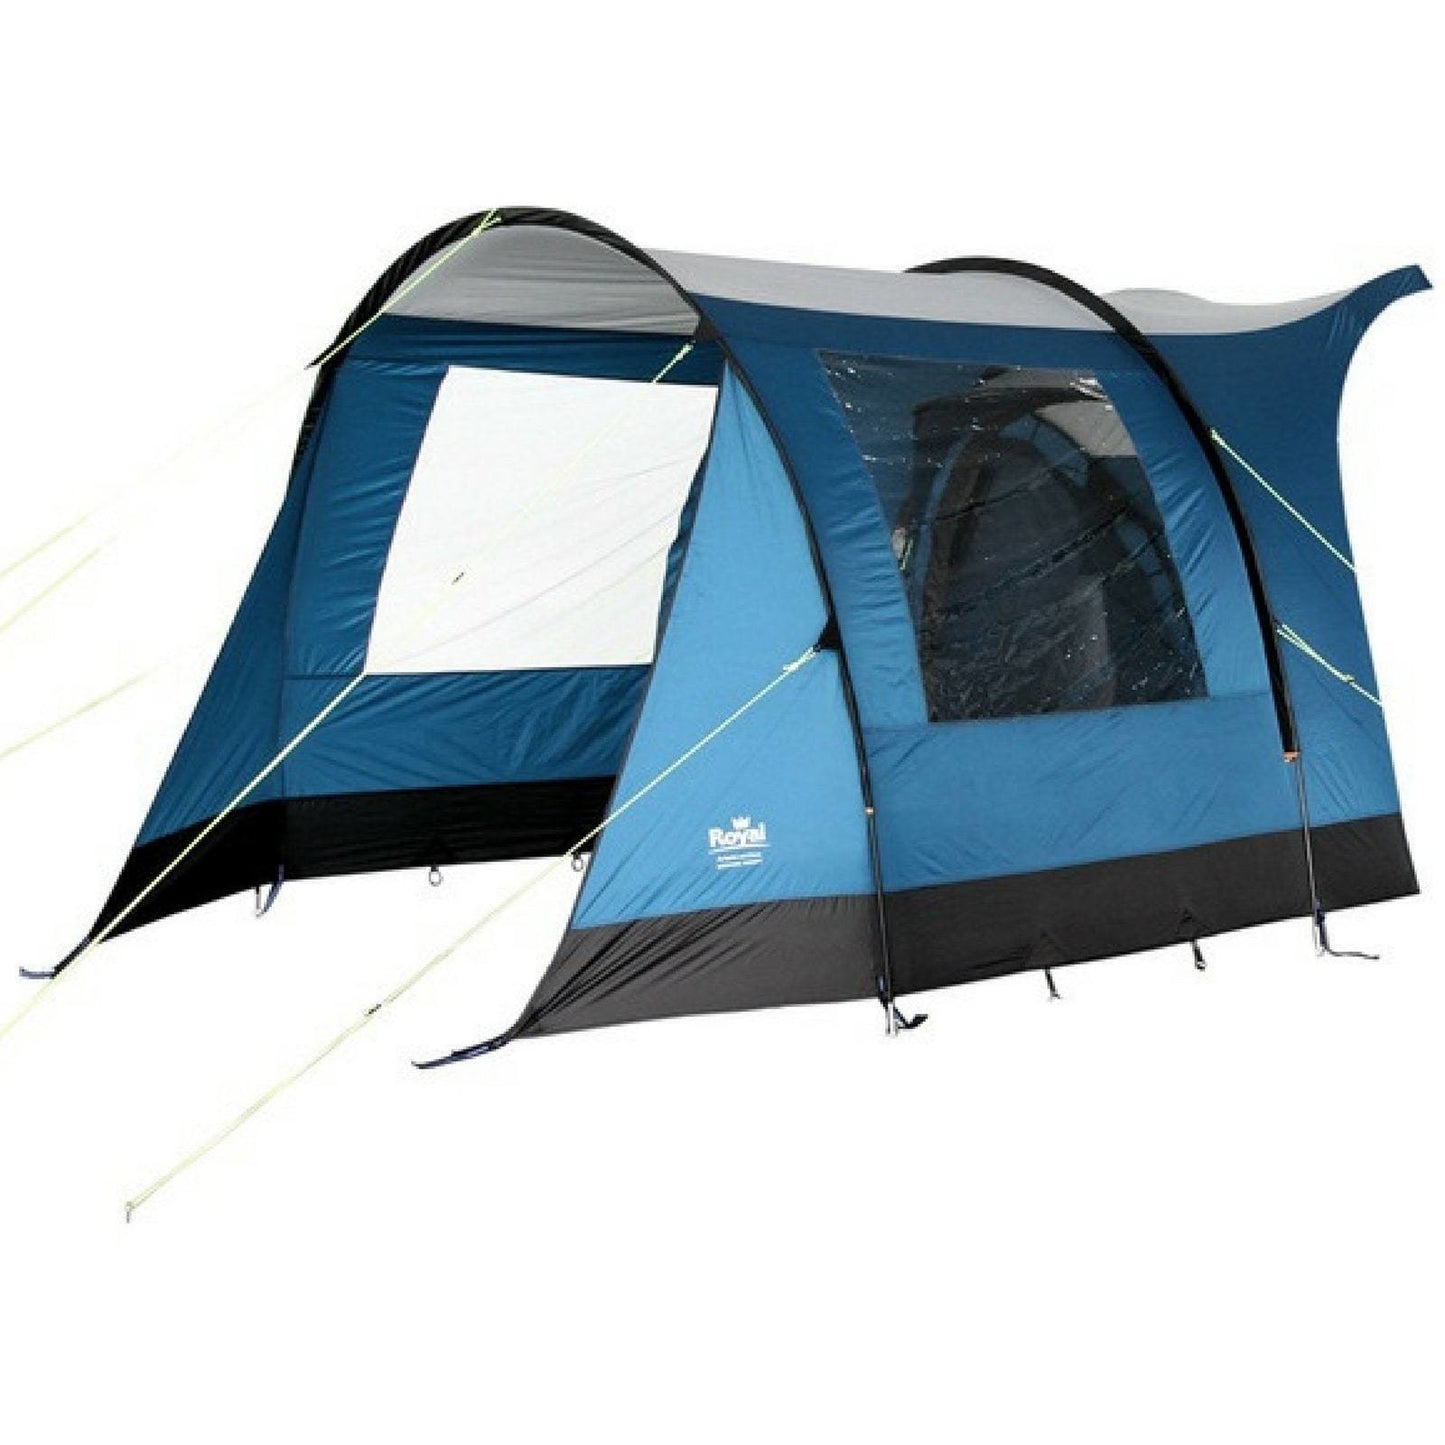 Royal Brisbane Tent Canopy 201512 - Quality Caravan Awnings